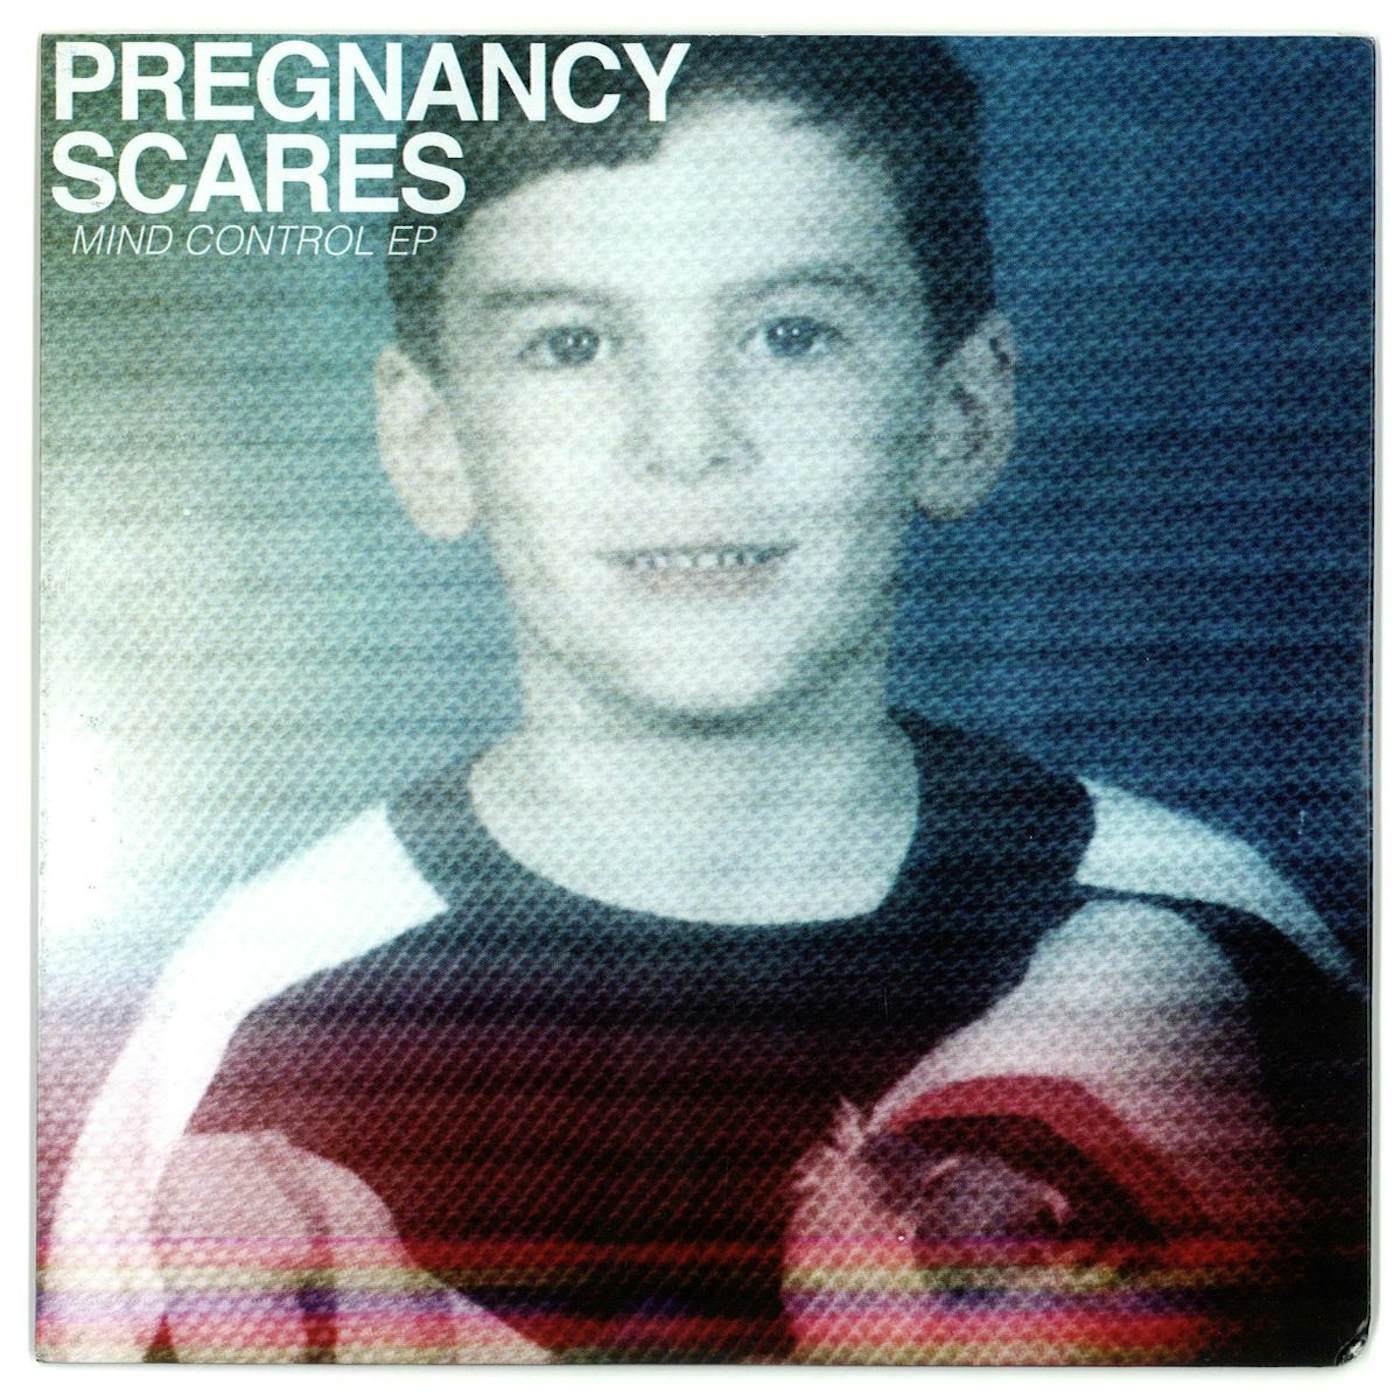 Pregnancy Scares Mind Control Vinyl Record